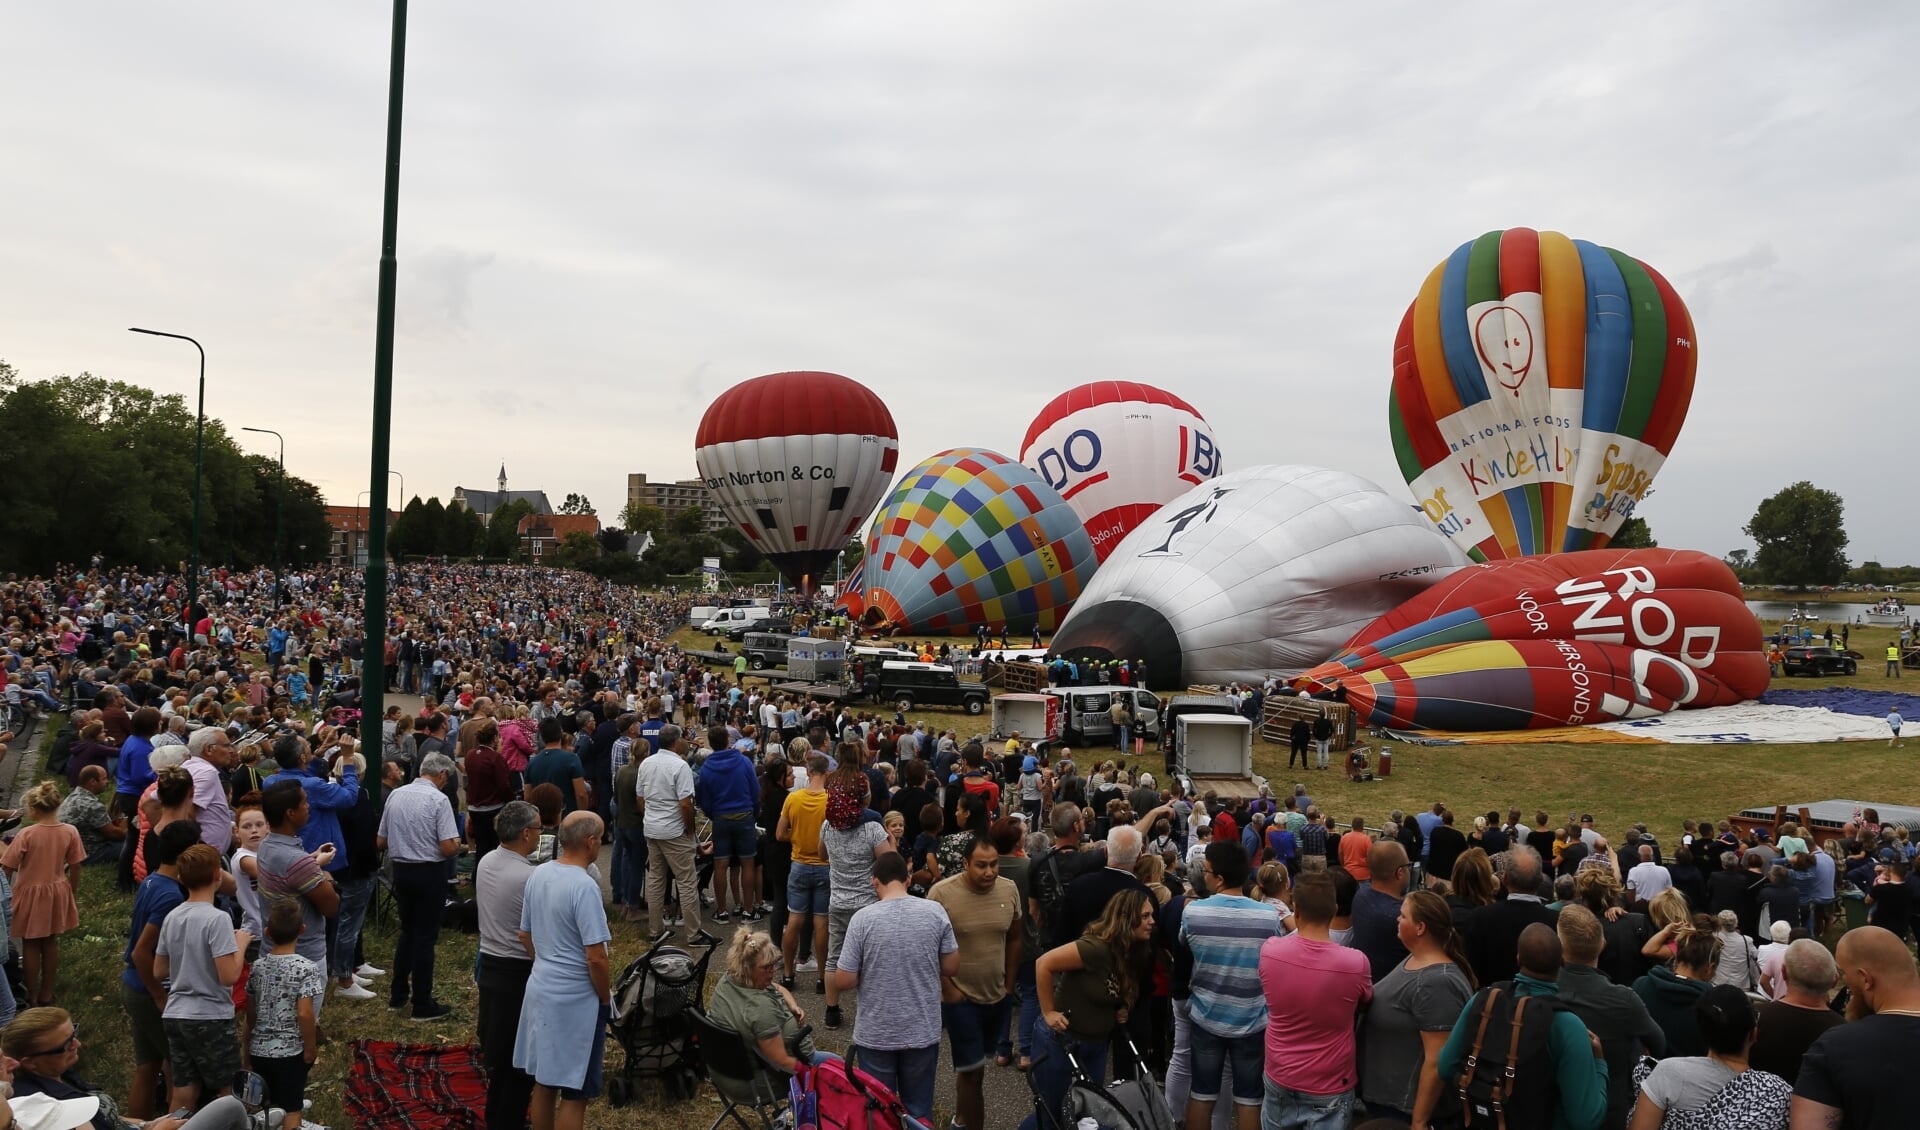 Drie keer is scheepsrecht: Tientallen ballonnen gaan op zondagavond alsnog de lucht in.